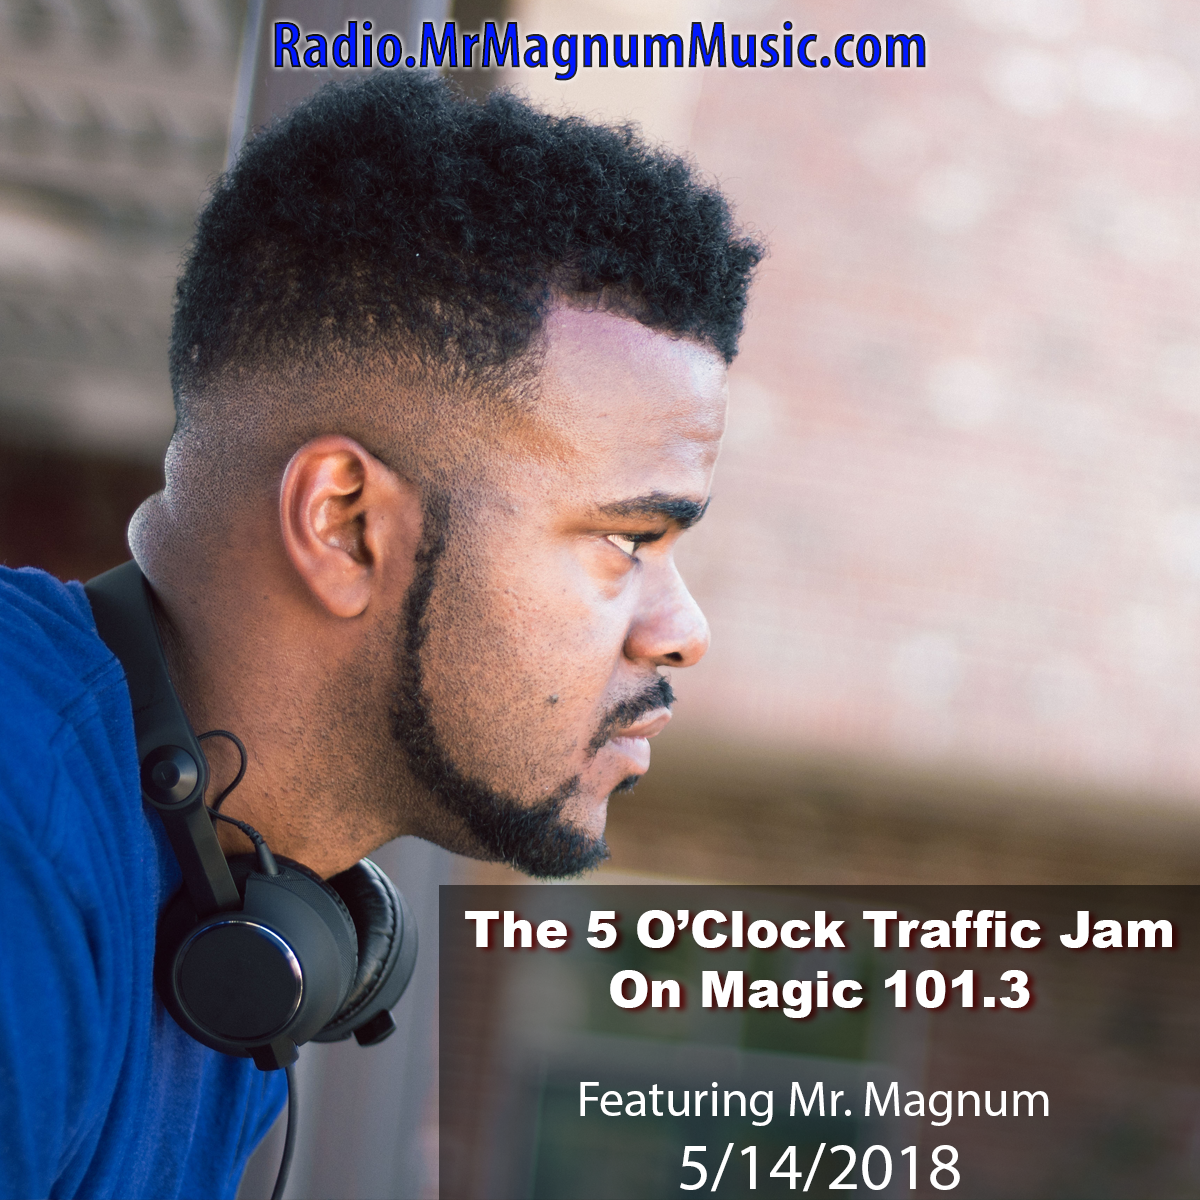 The 5 O'Clock Traffic Jam 20180514 featuring Gainesville's #1 DJ, Mr. Magnum on Magic 101.3